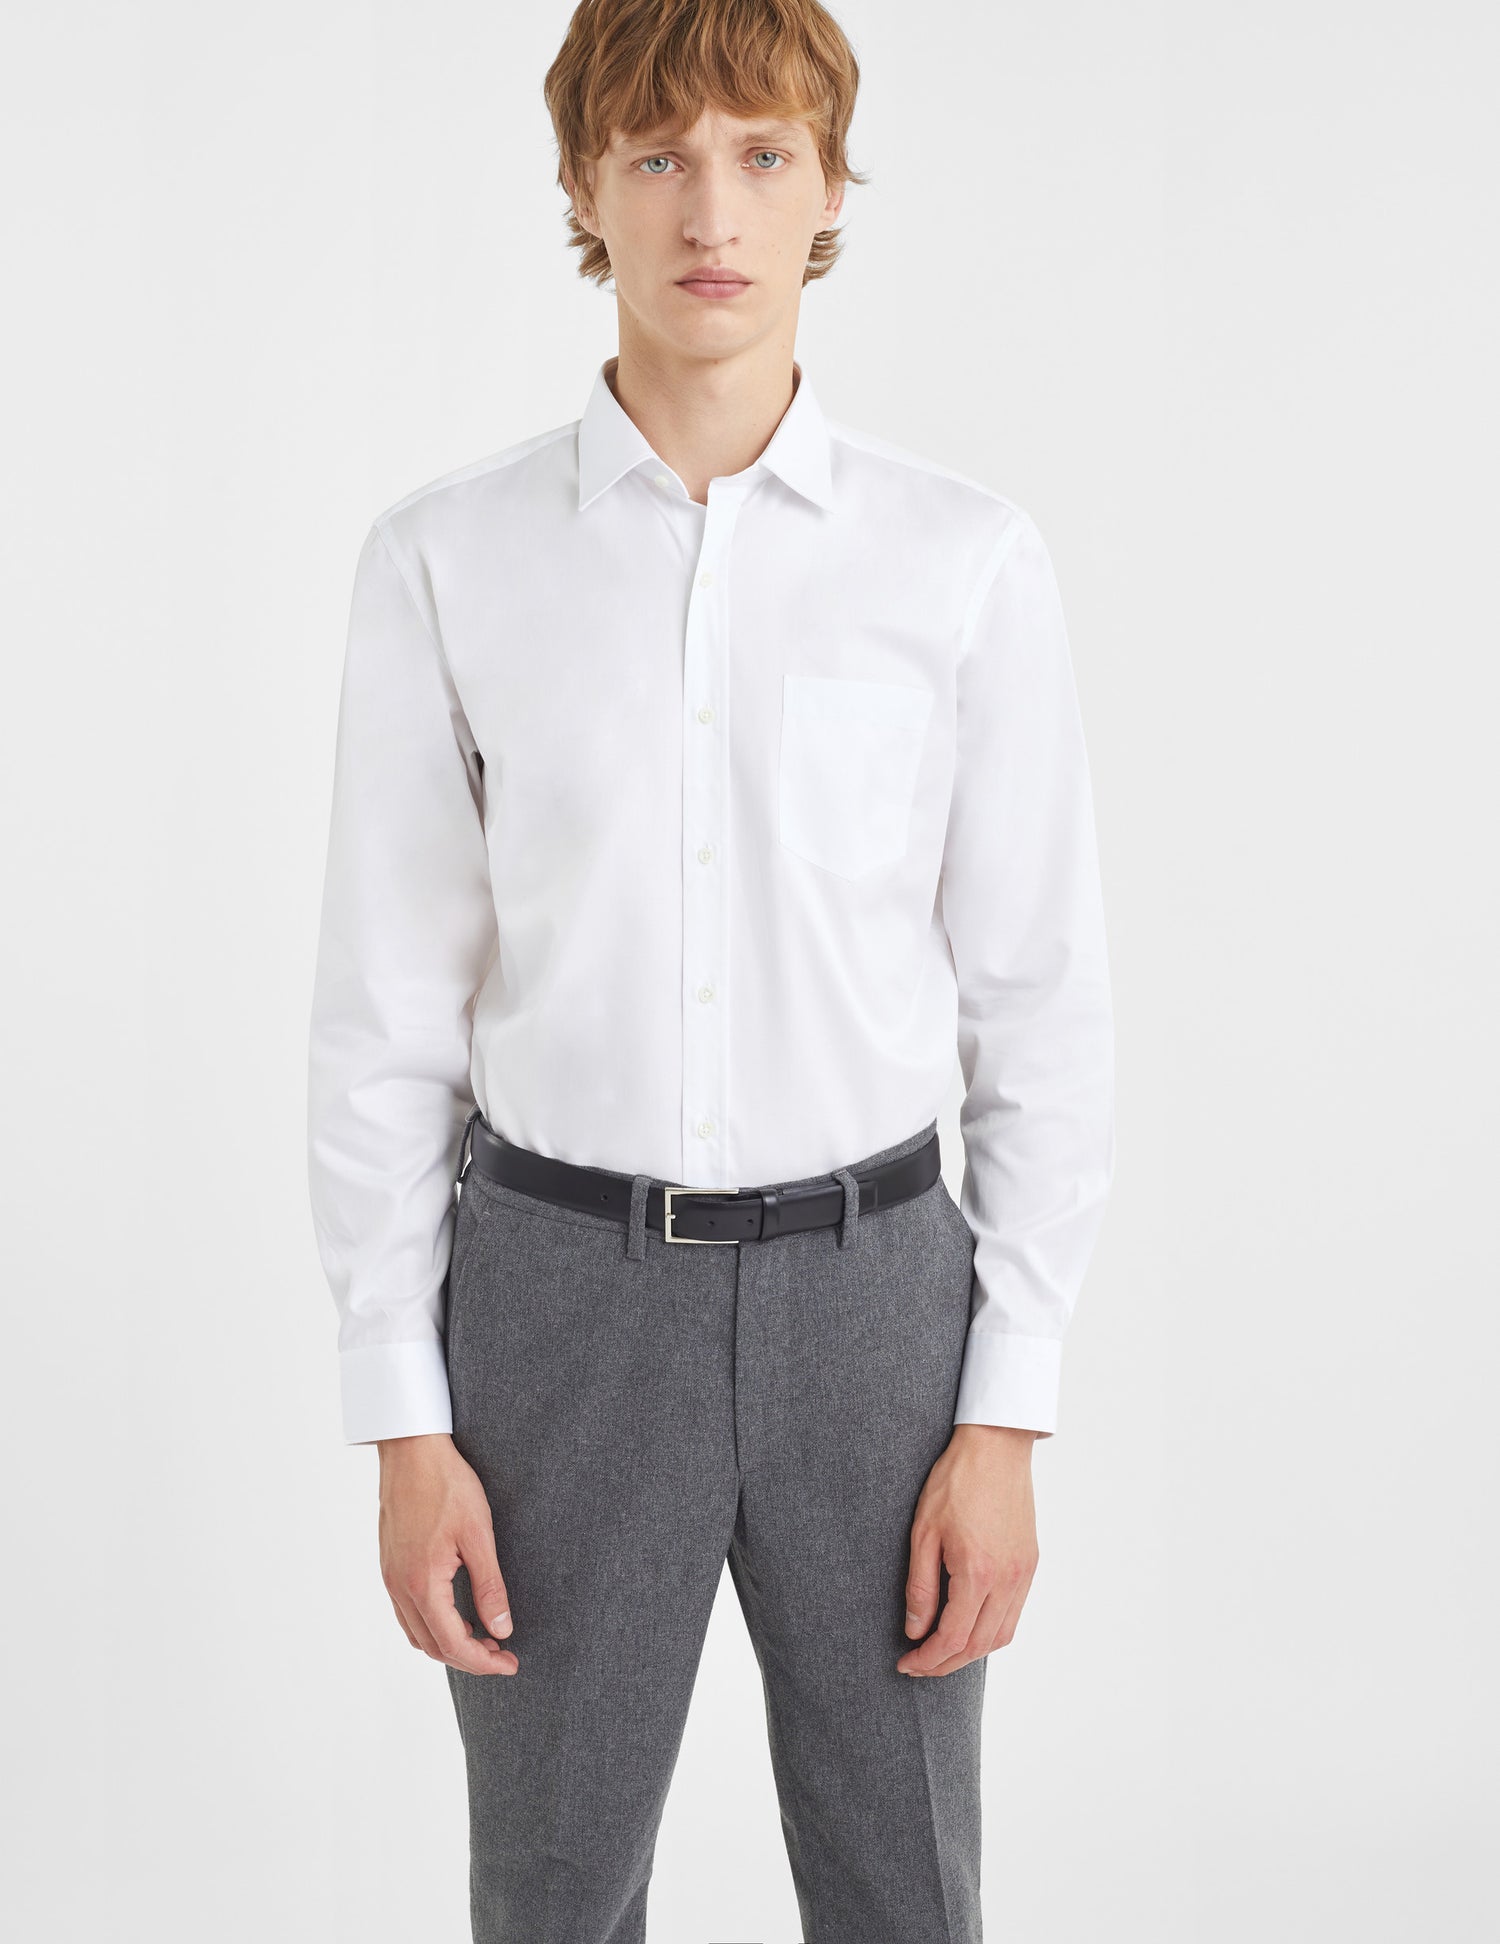 Classic white shirt - Twill - Figaret Collar#2